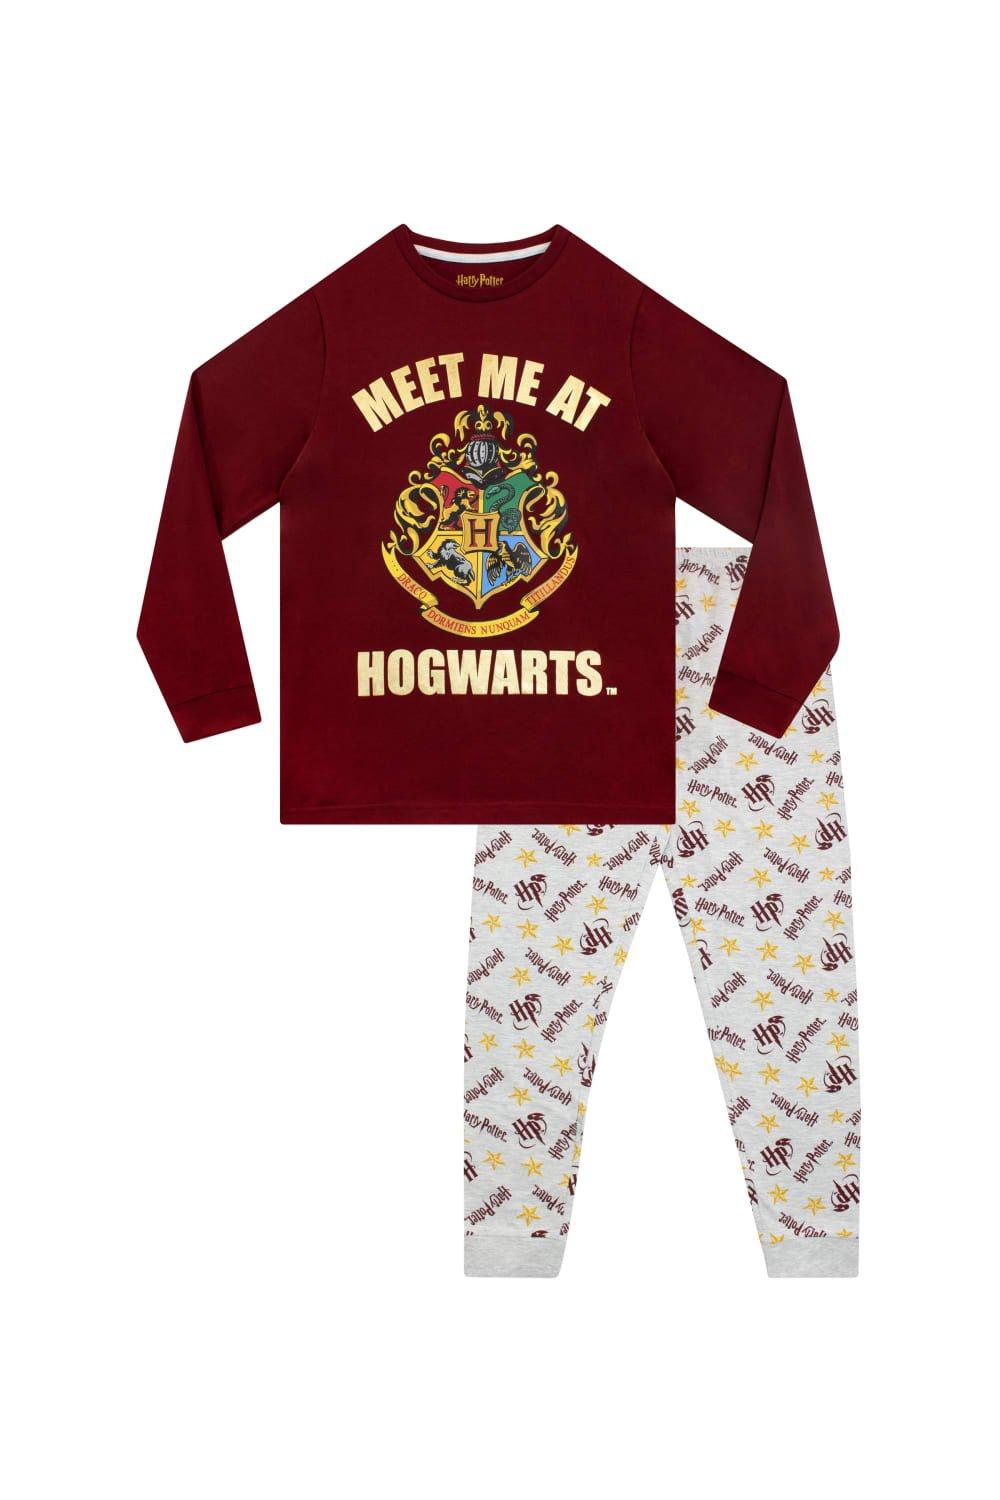 Hogwarts Pyjamas